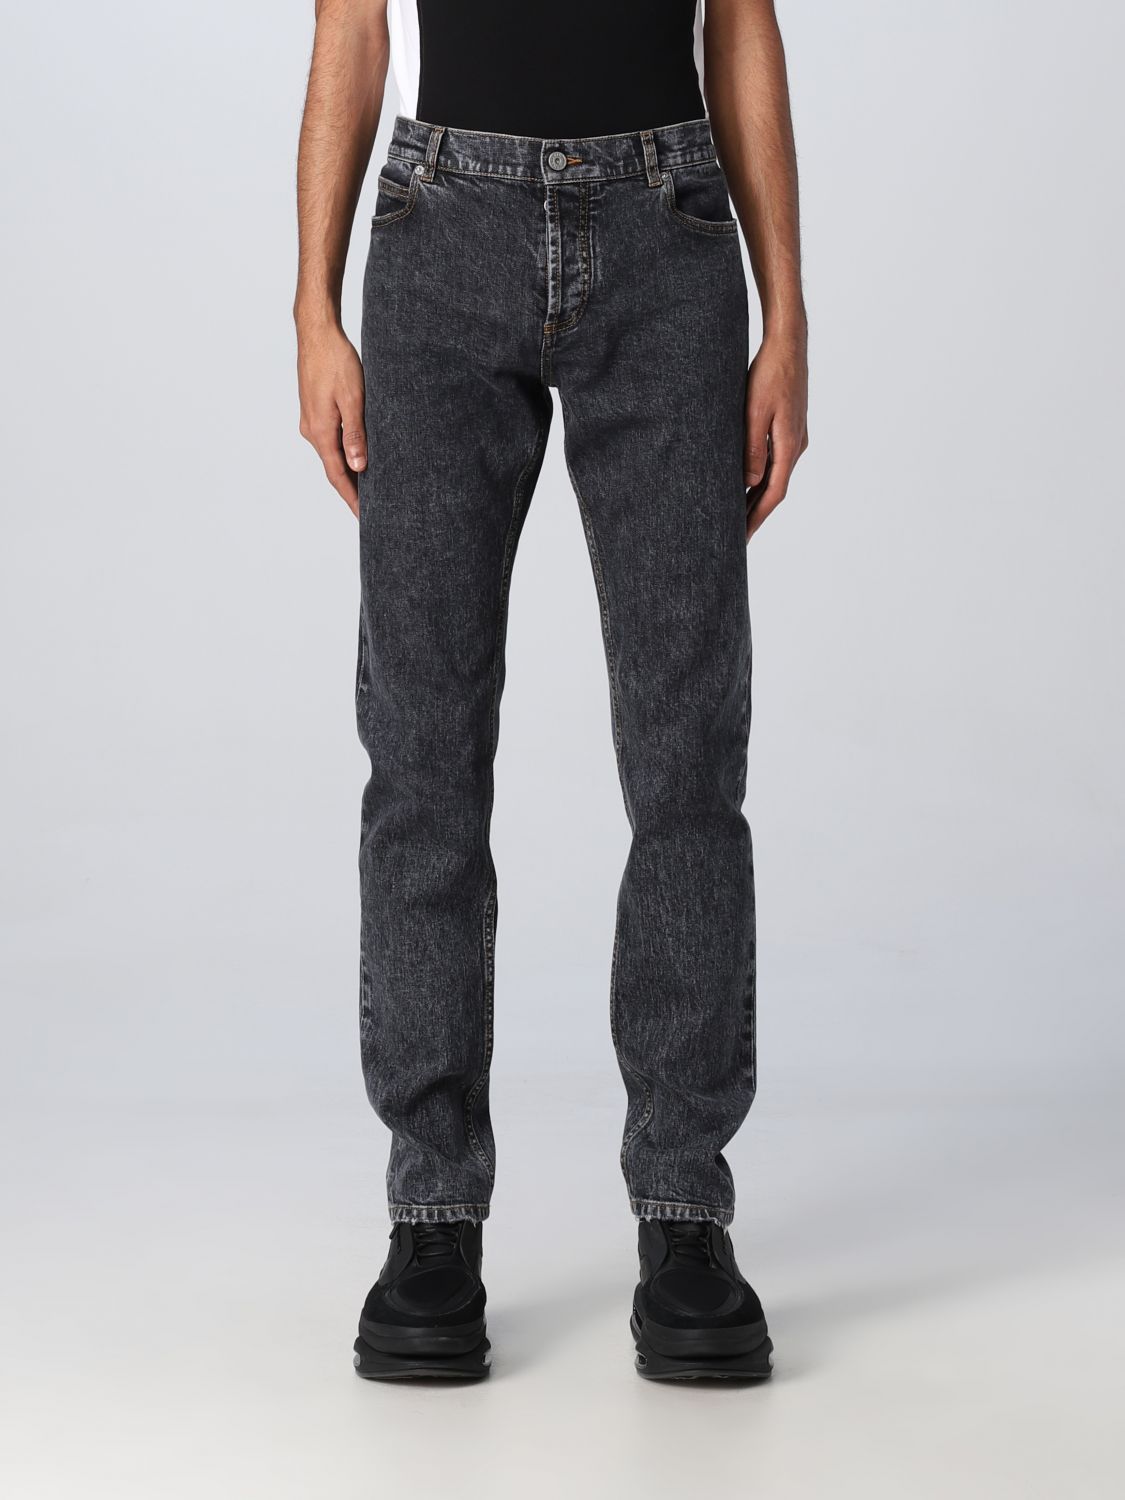 BALMAIN: jeans for man - Black | Balmain jeans AH1MG000DD10 online on ...